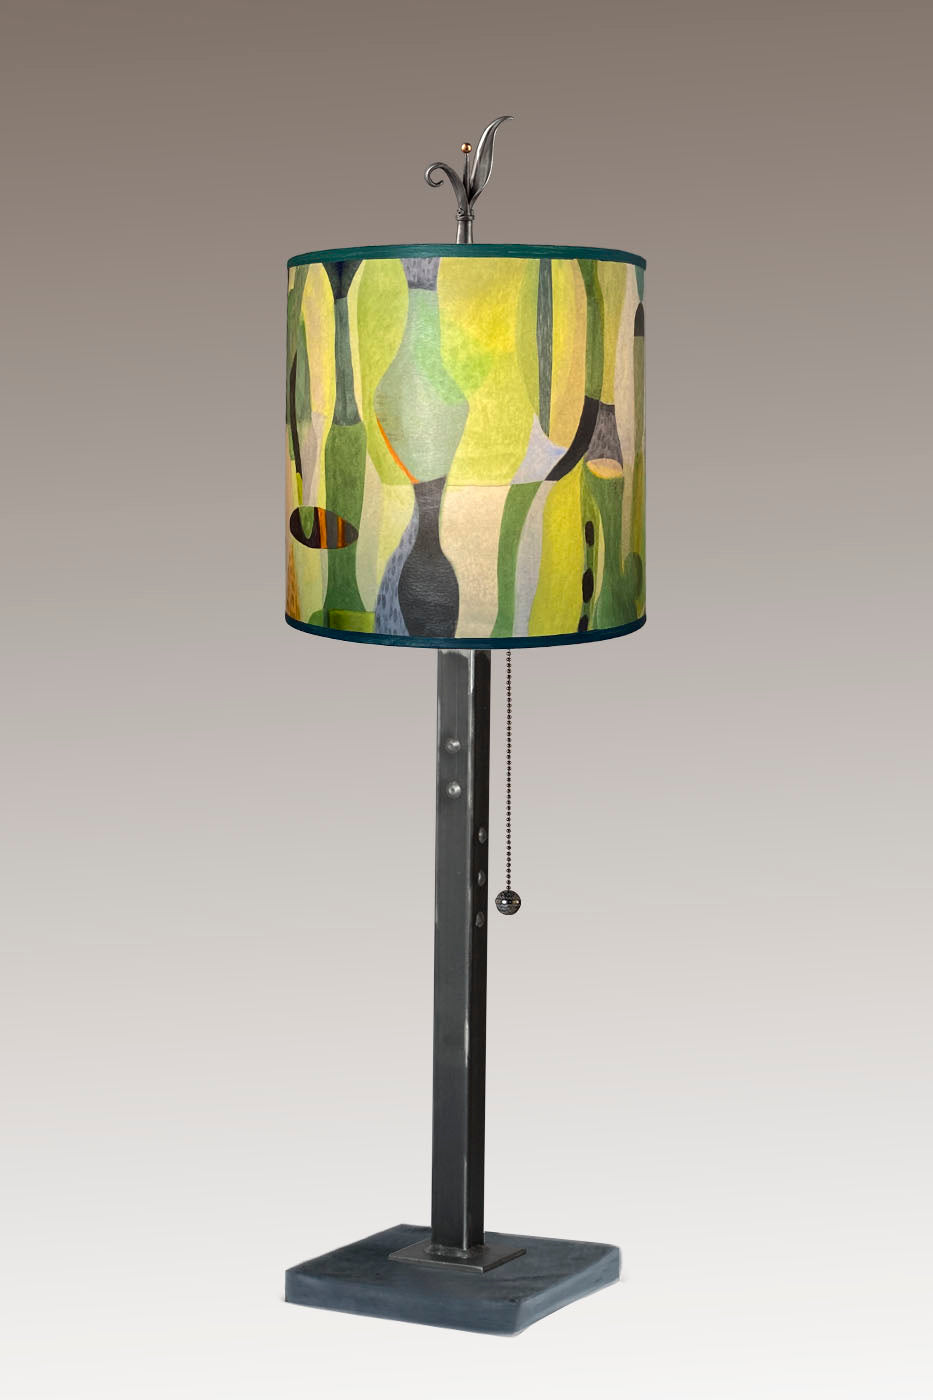 Janna Ugone &amp; Co Table Lamp Steel Table Lamp Medium Drum Shade in Riviera in Citrus